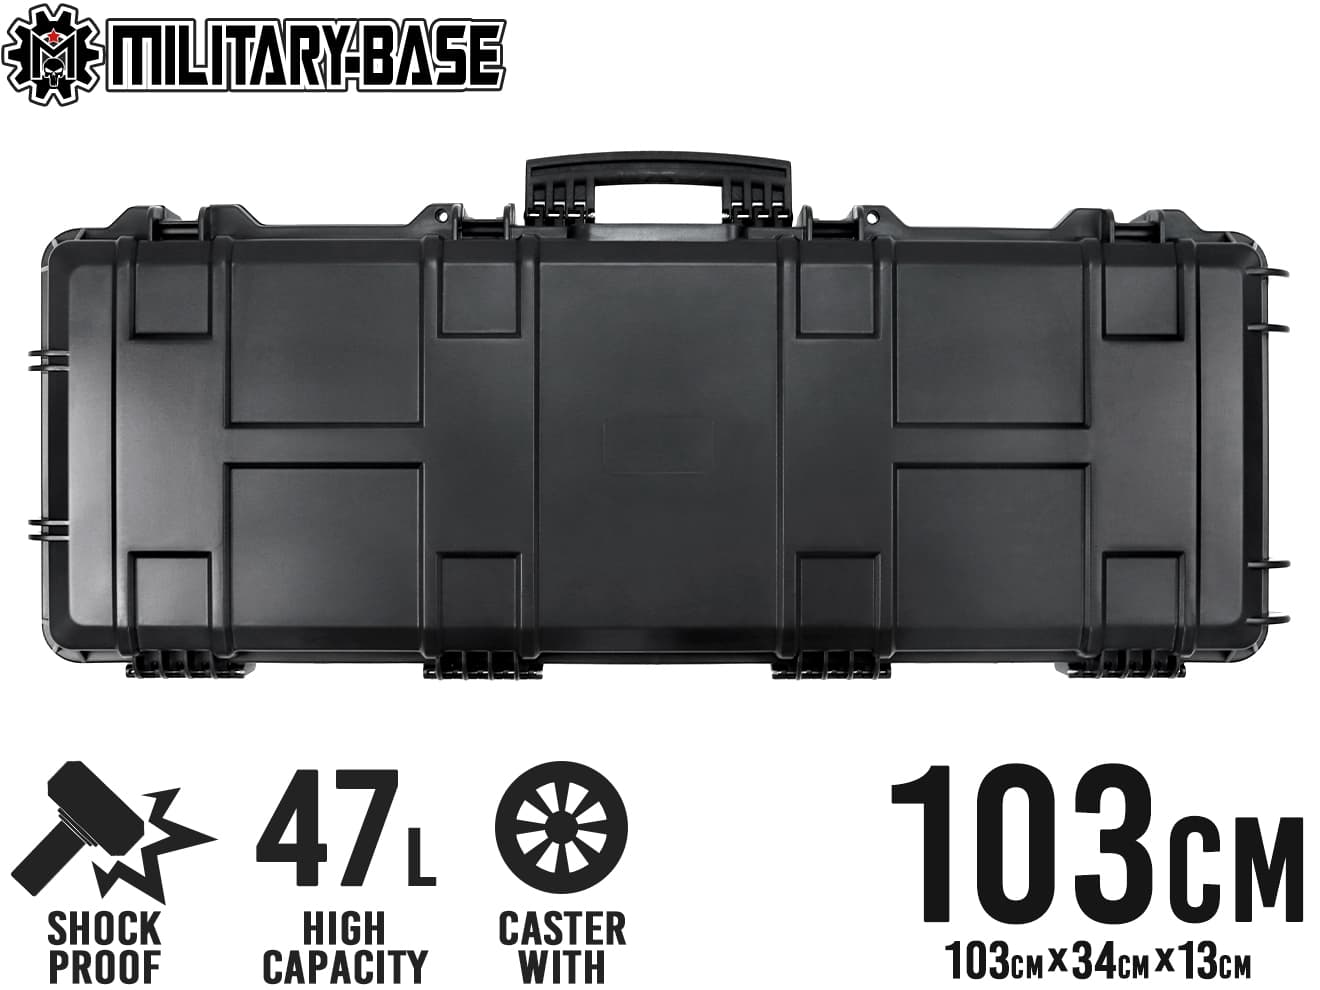 MILITARY-BASE ハイプロテクション ワイドライフル ハードケース 47L 103cm | ミリタリーベース – ミリタリーベース -  MILITARY BASE -